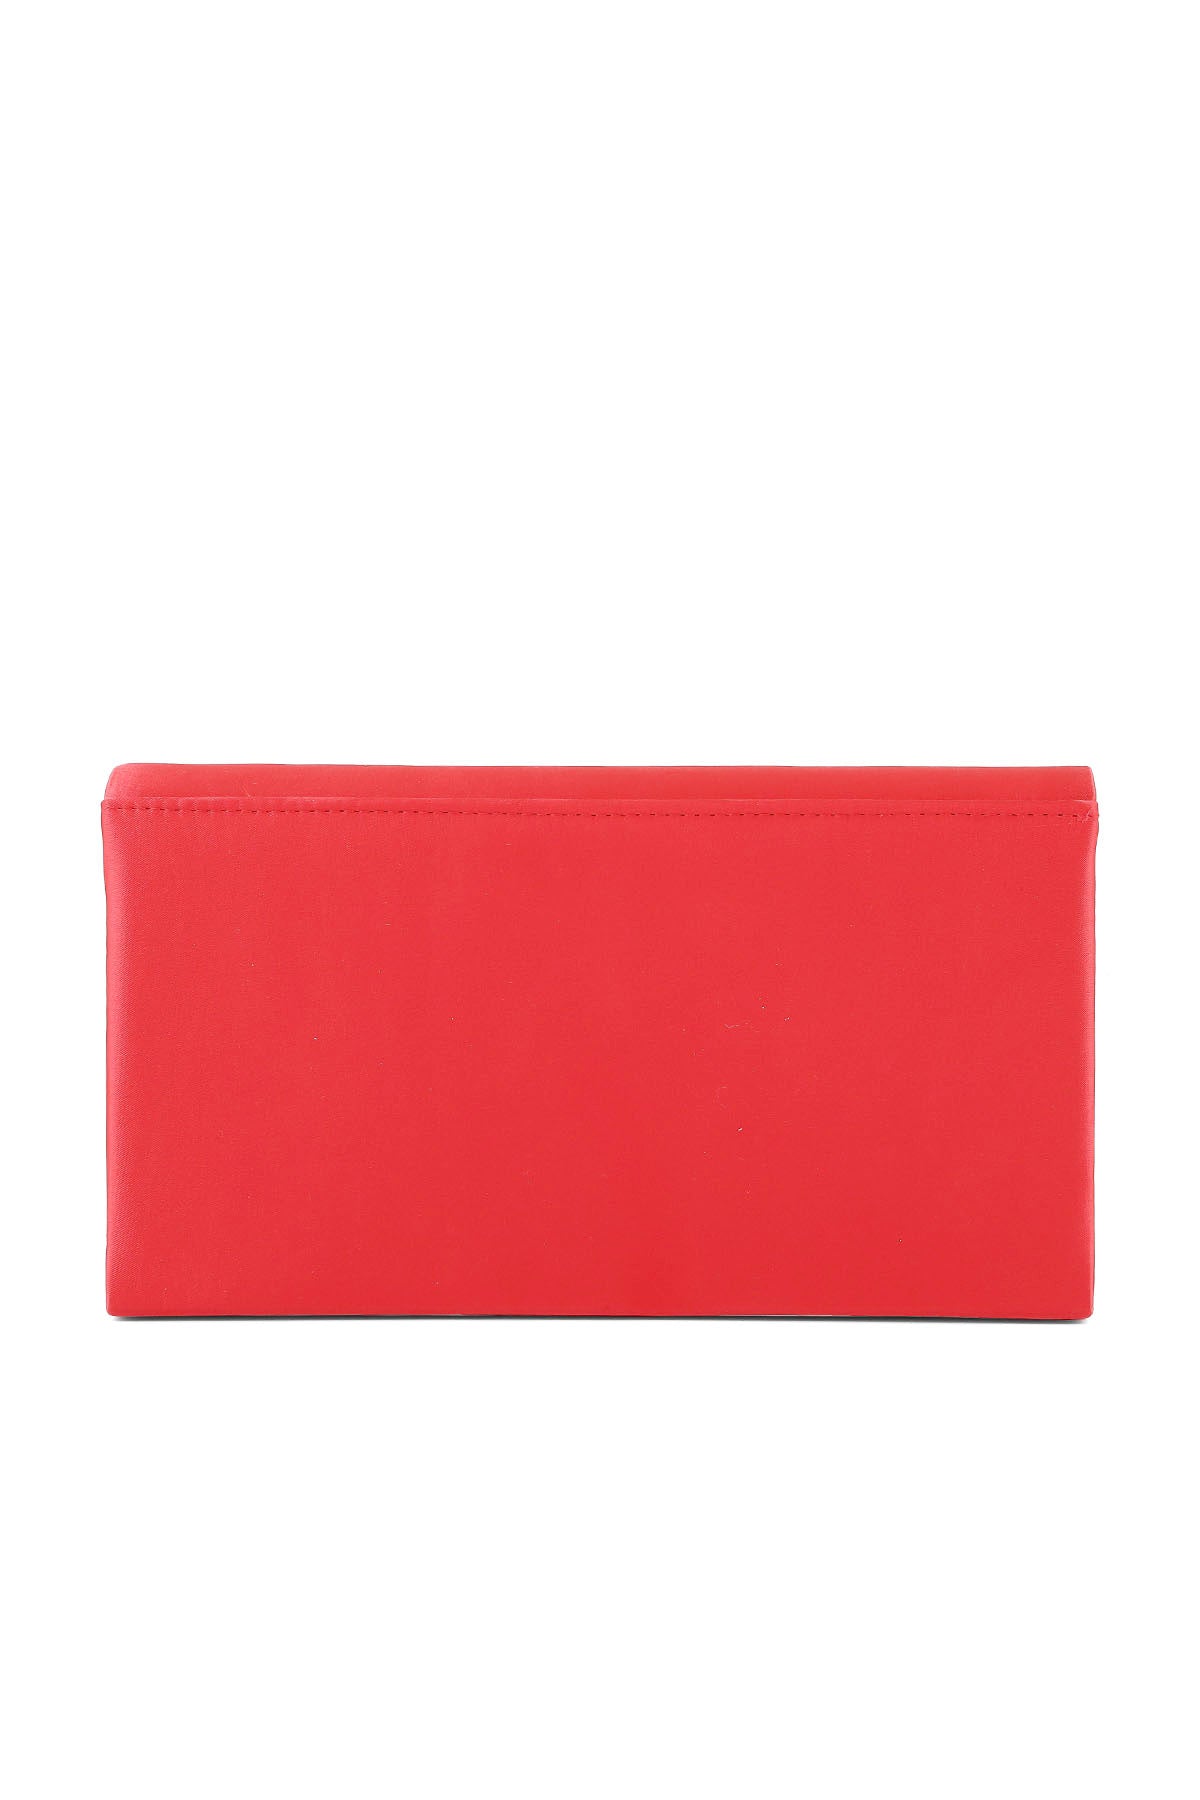 Flap Shoulder Bags B21583-Red